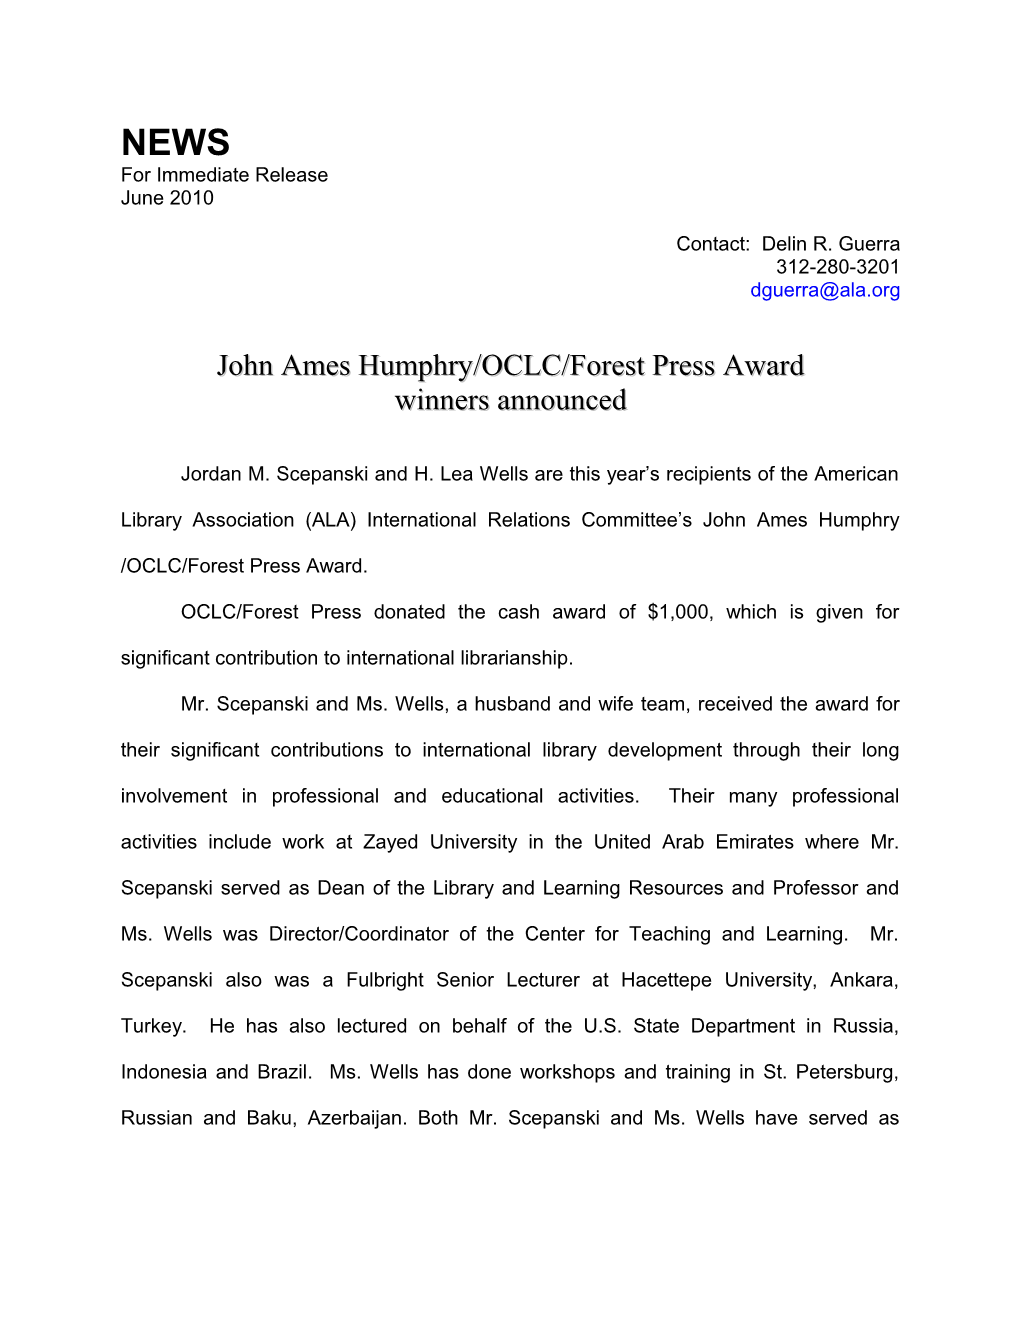 John Ames Humphry/OCLC/Forest Press Award